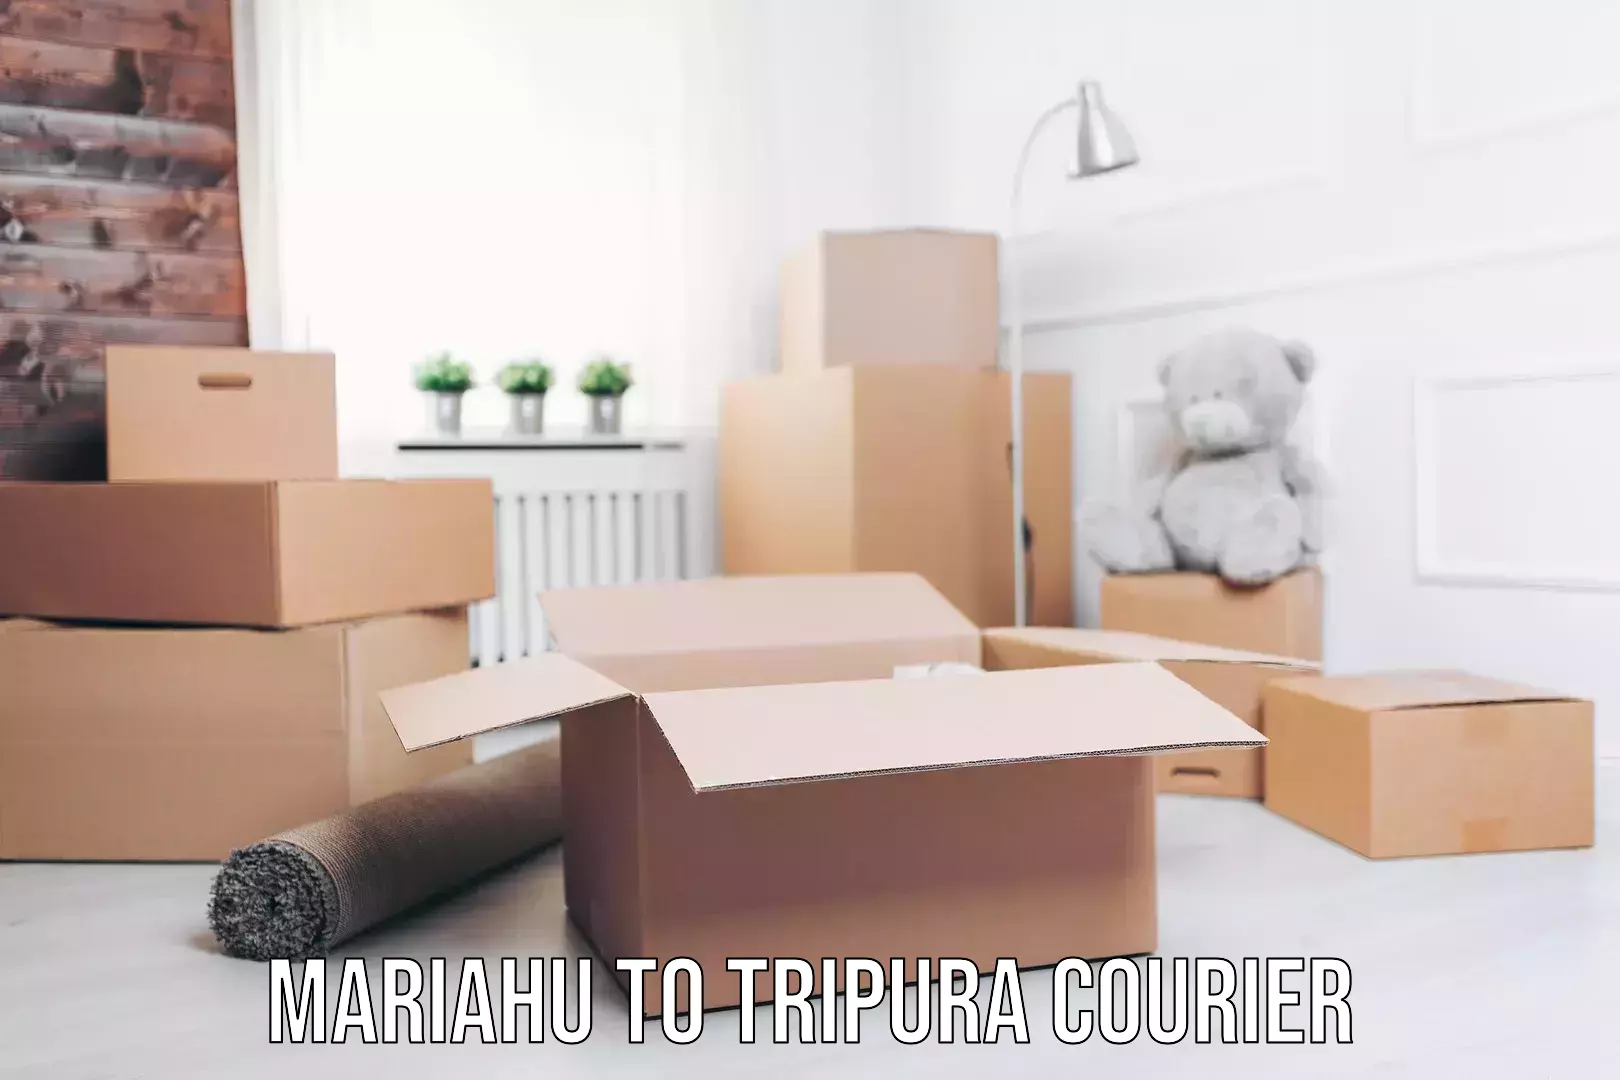 Professional moving assistance Mariahu to Tripura